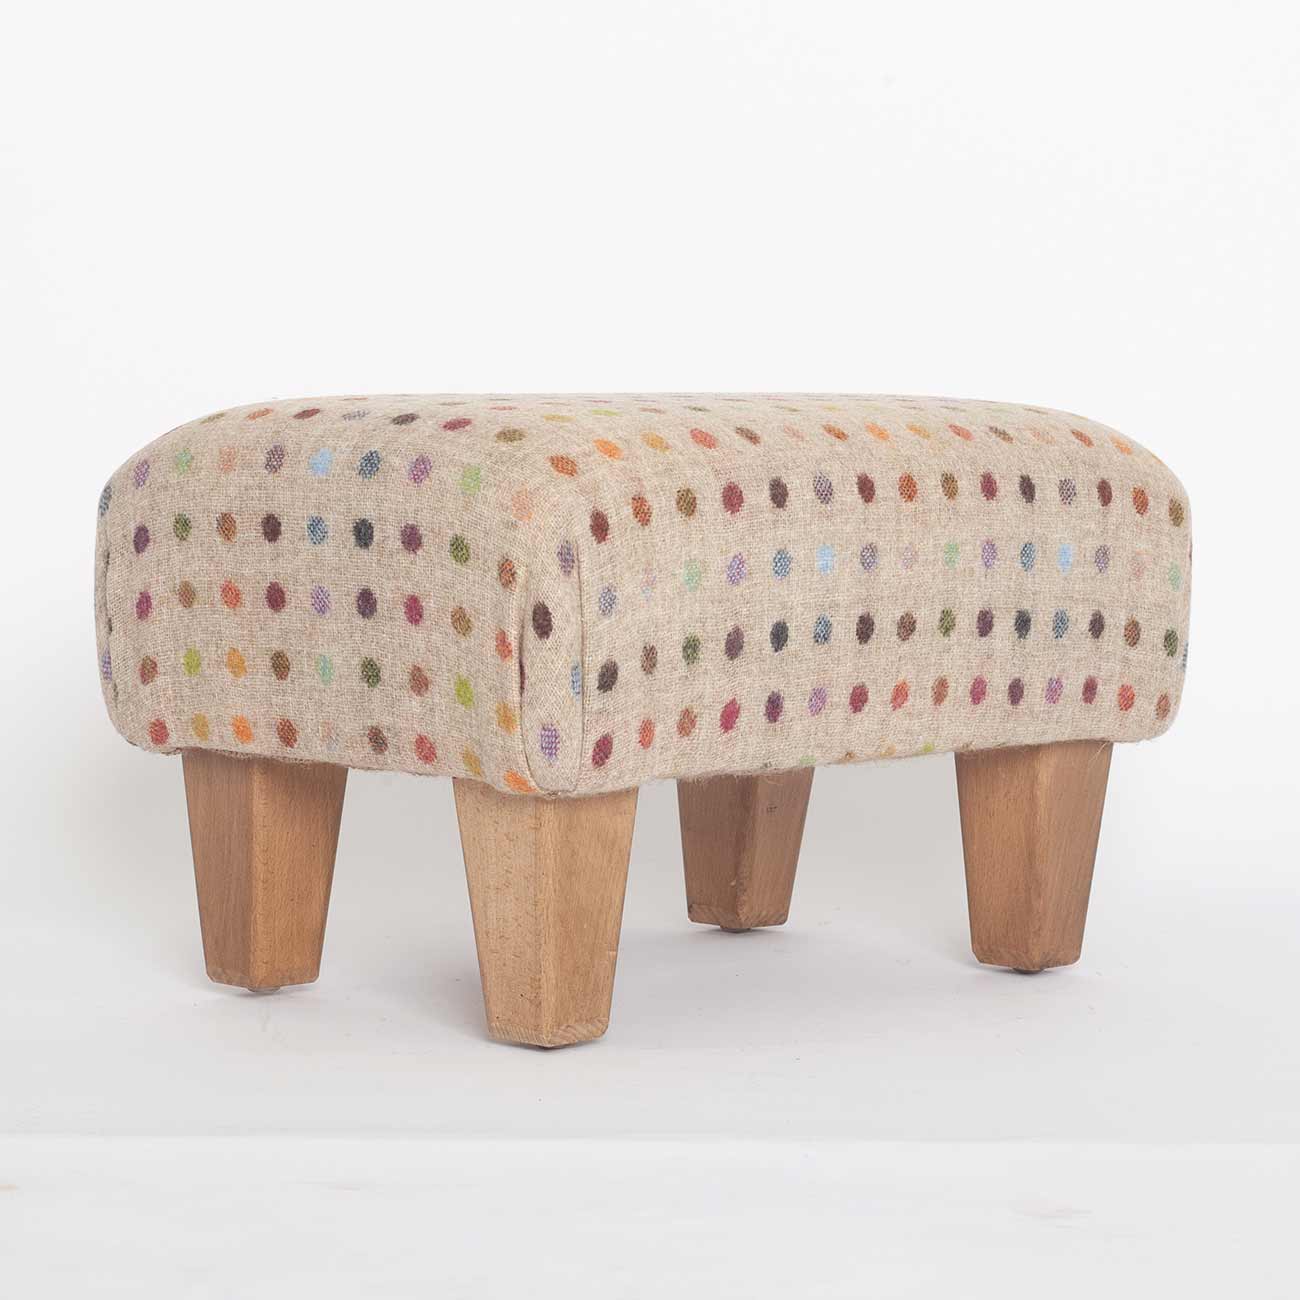 spotty-pattern-footstool5 fabric from JLP